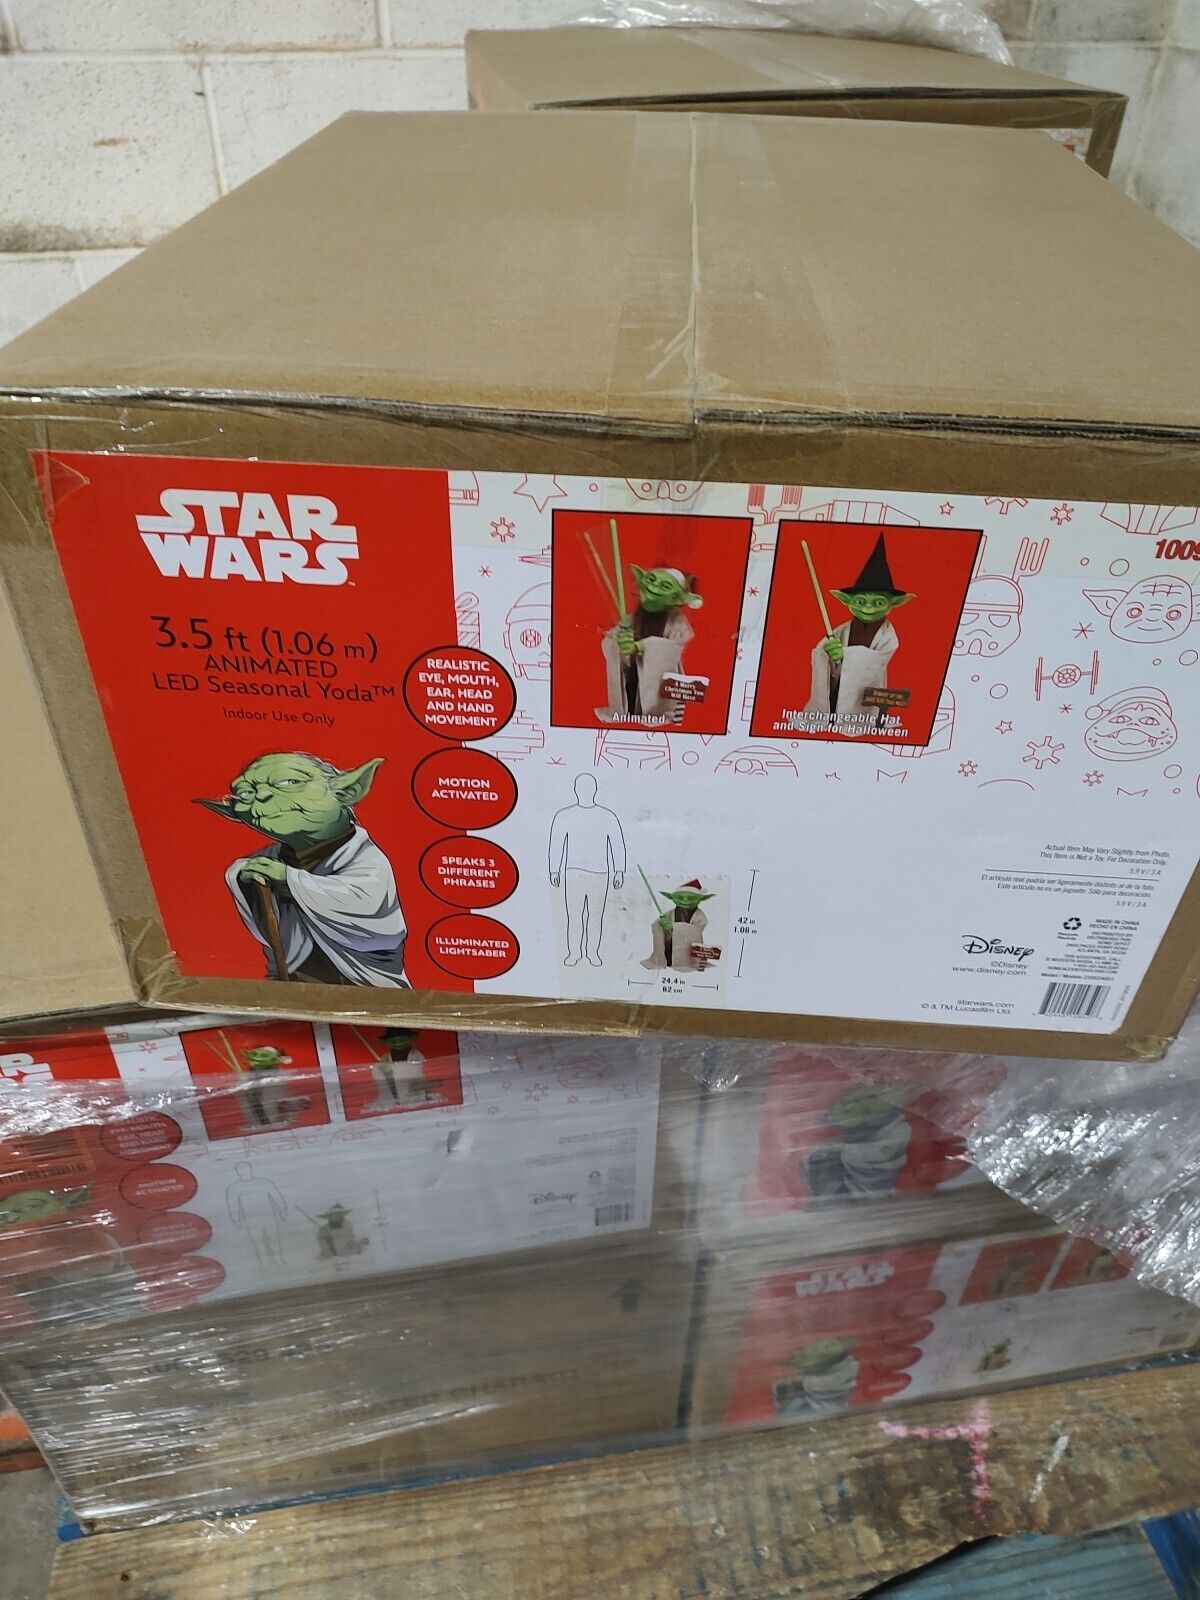 Disney Star Wars 3.5 ft Animated LED Seasonal Yoda Indoor Use Only Home Decor